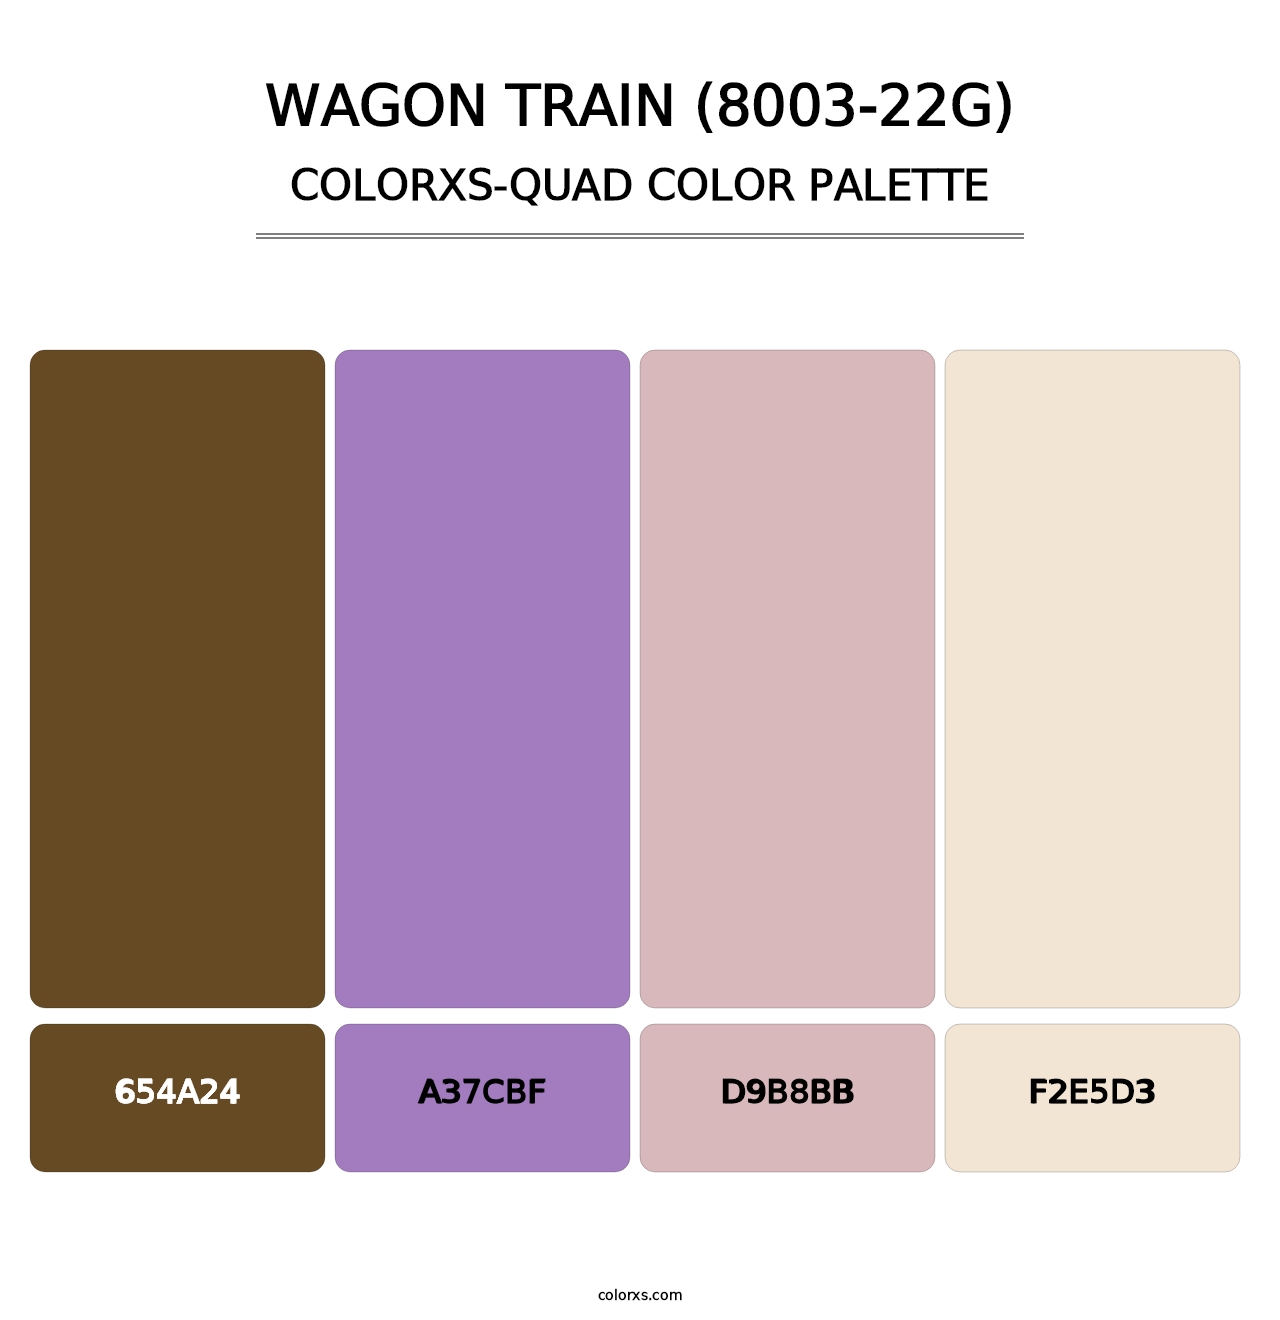 Wagon Train (8003-22G) - Colorxs Quad Palette